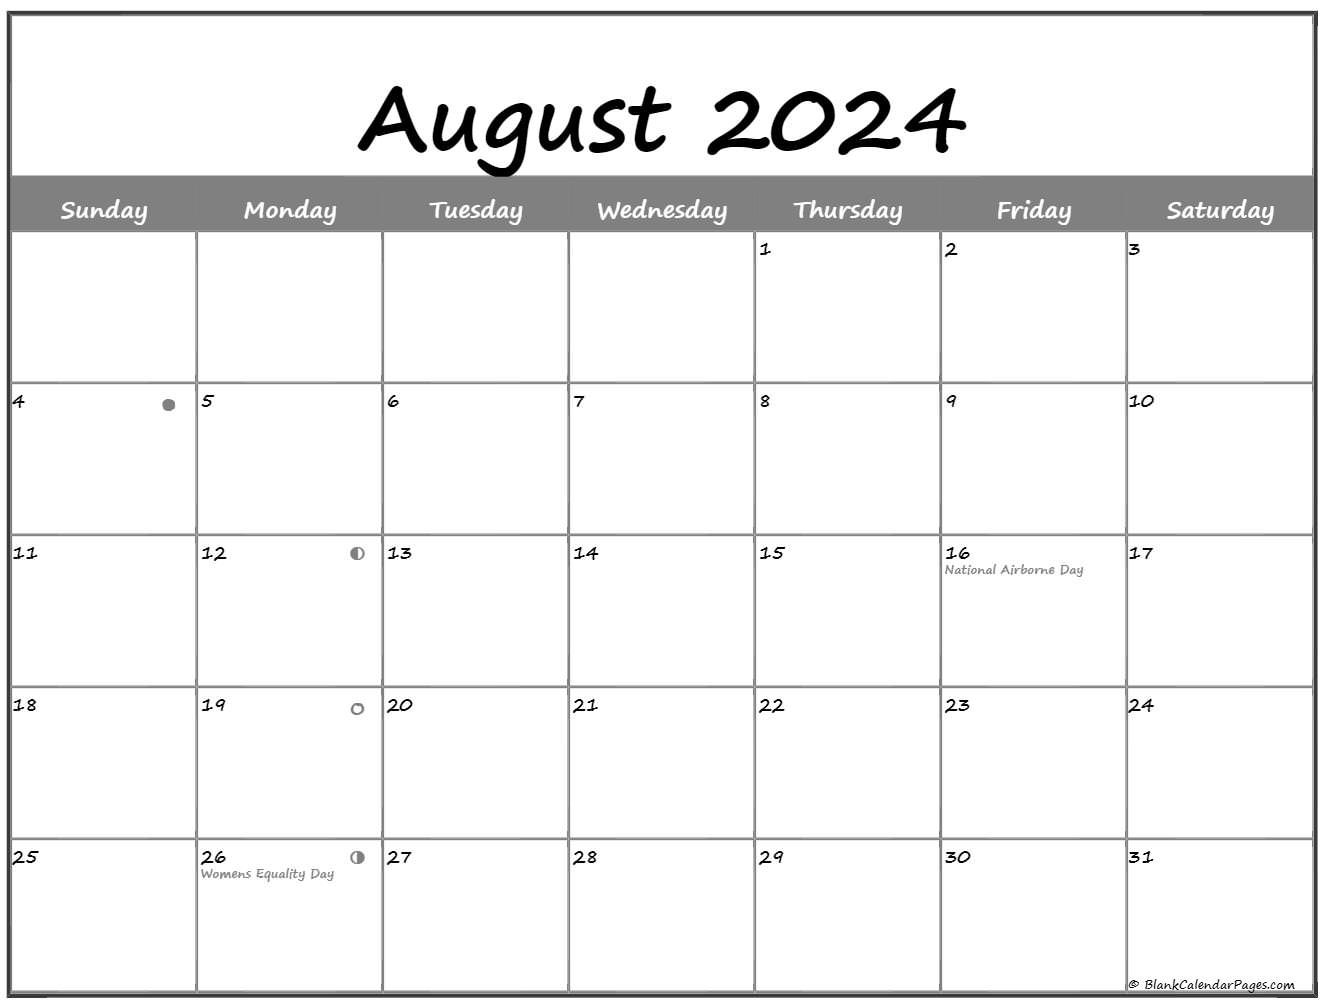 August 2021 Lunar Calendar | Moon Phase Calendar